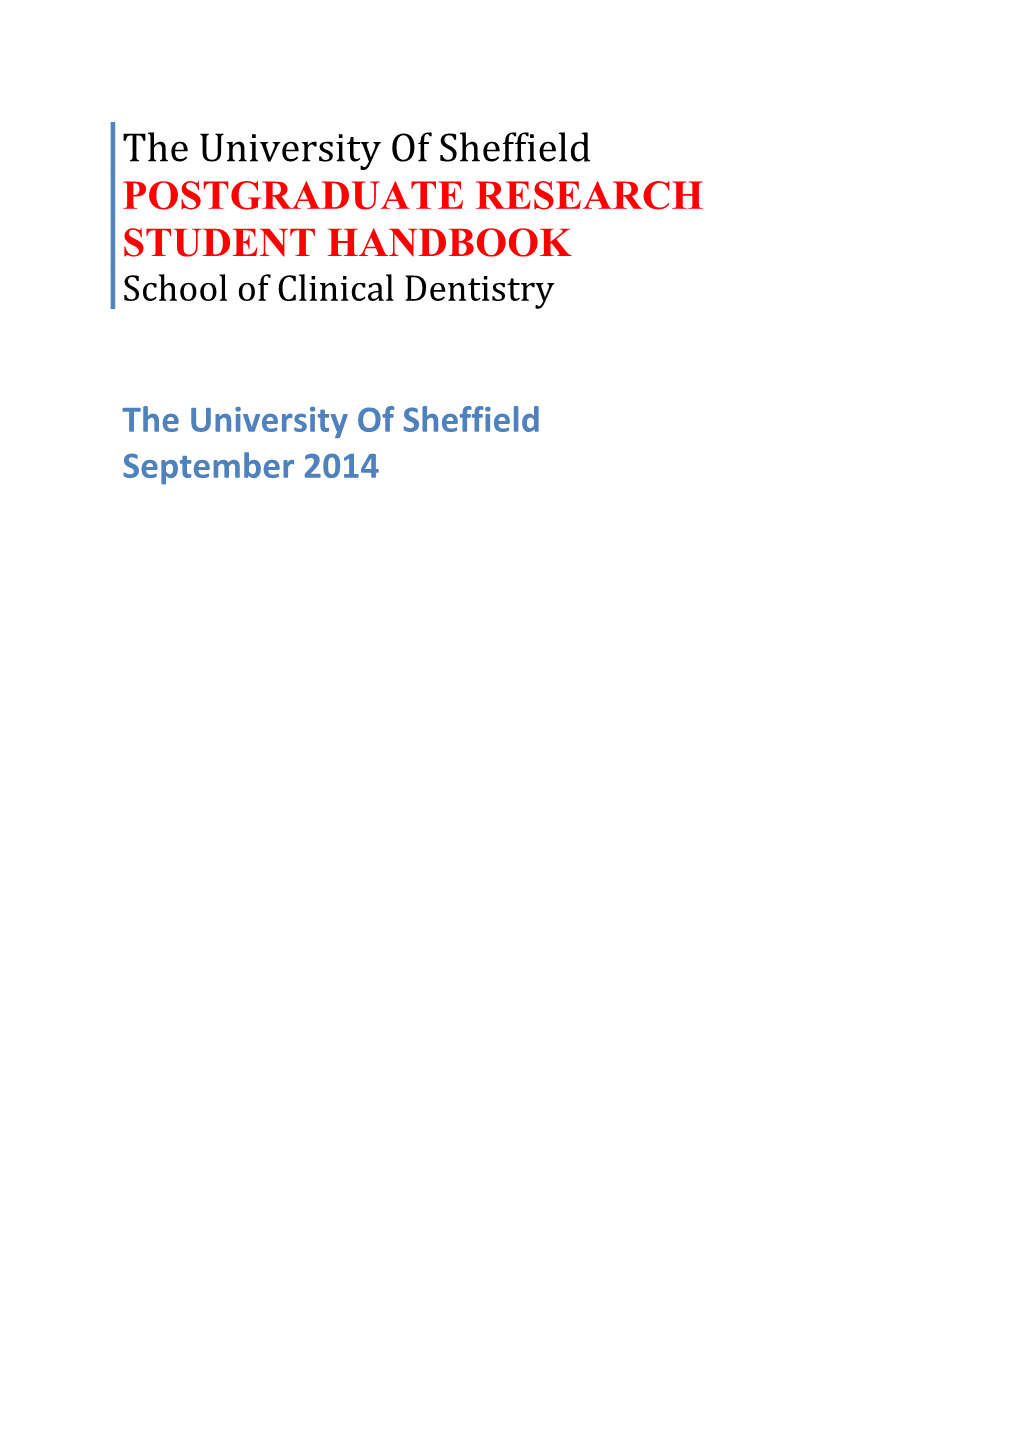 Postgraduate Research Student Handbook